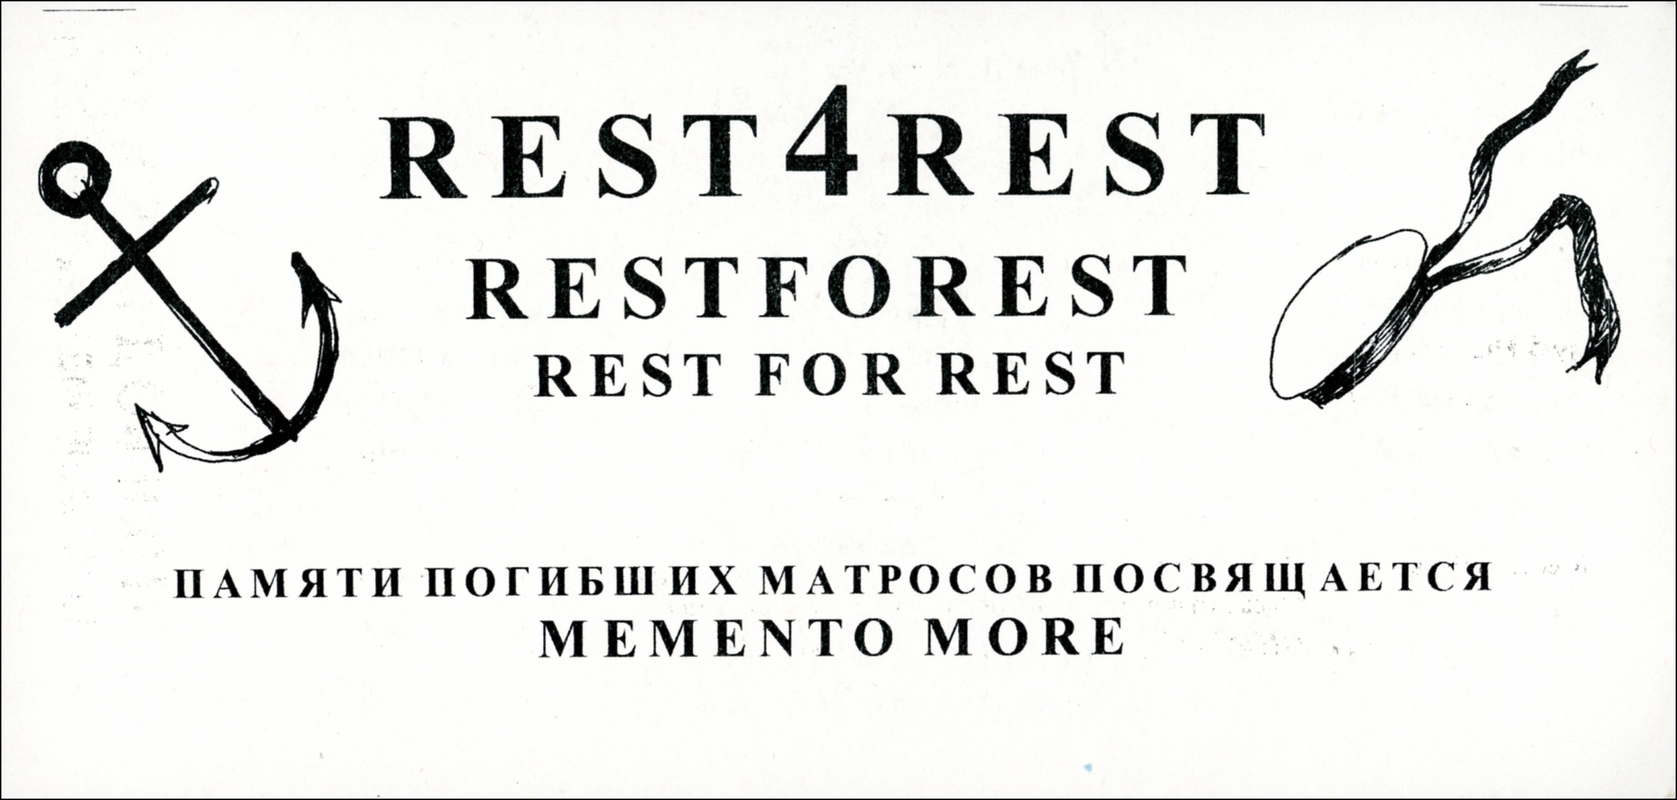 Rest4Rest